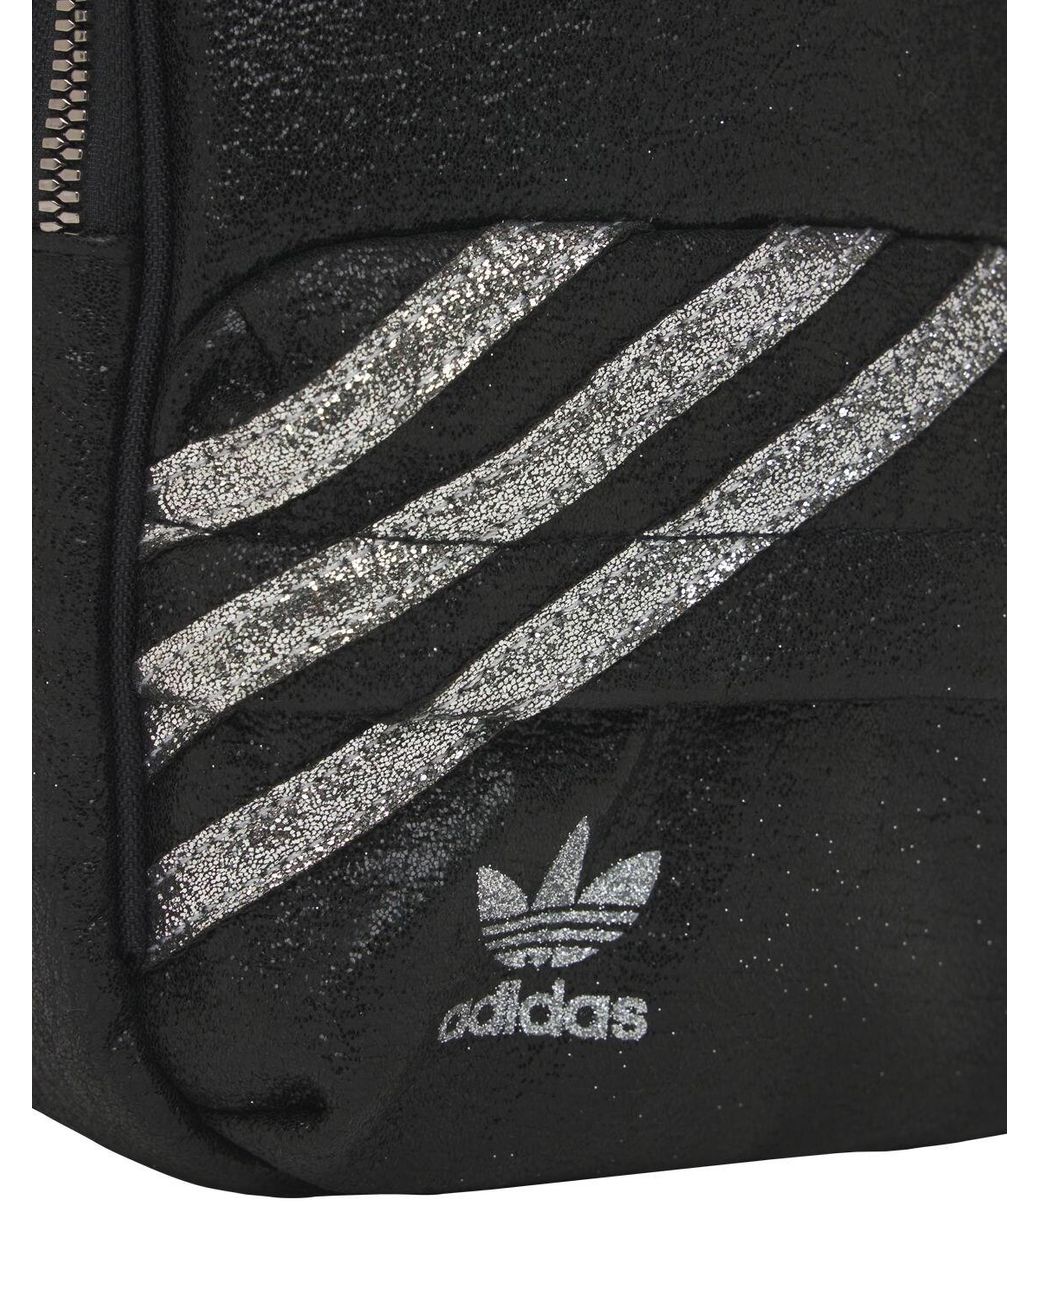 adidas Originals Bp Mini Backpack in Black | Lyst Australia